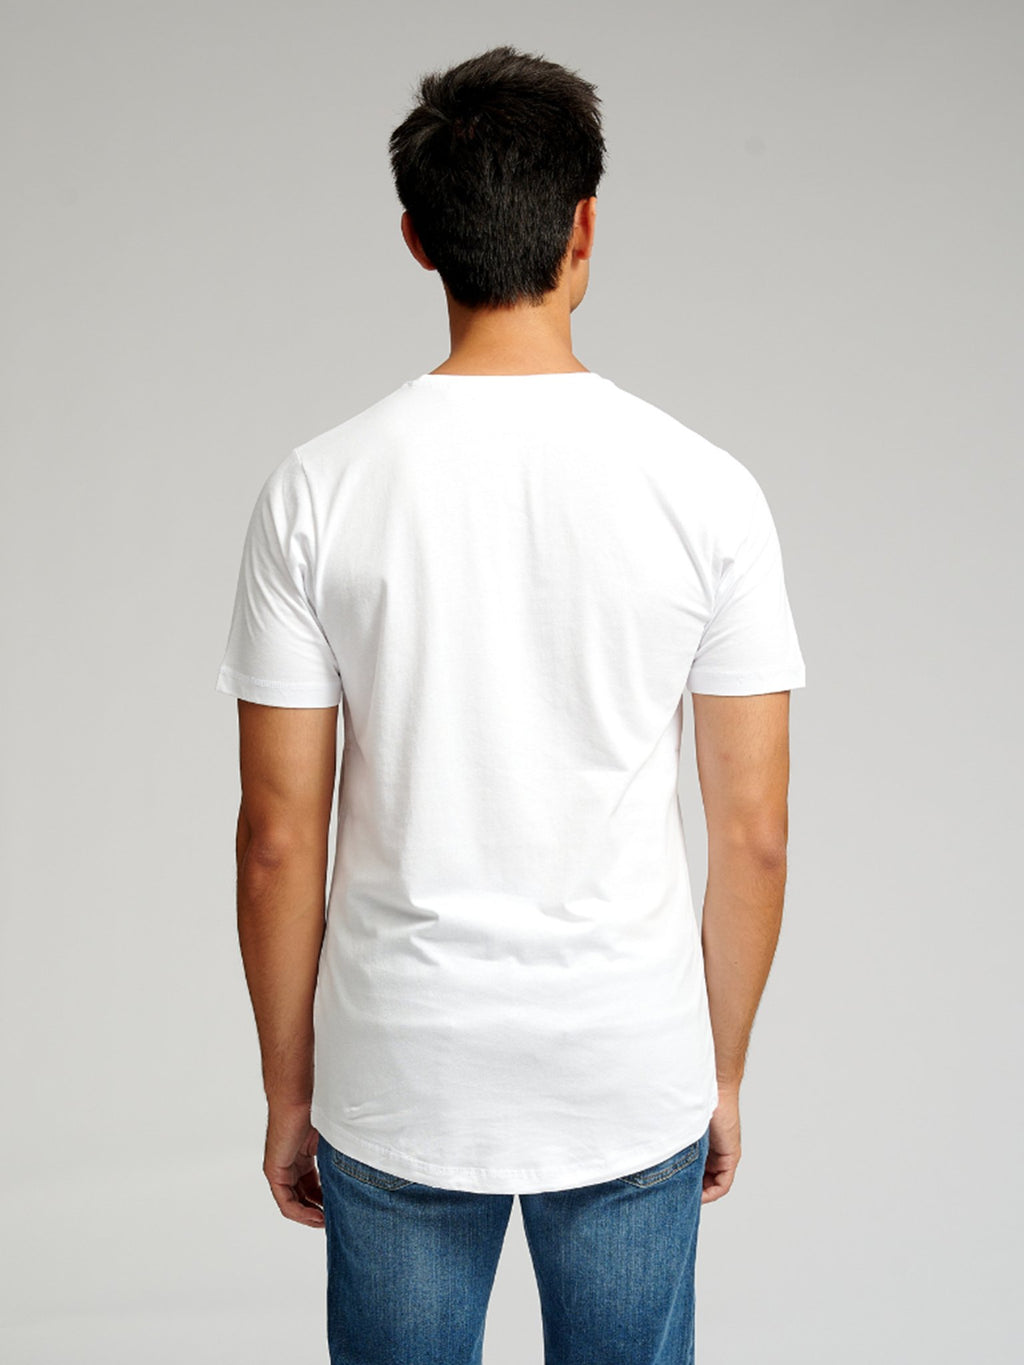 T-shirt long - blanc